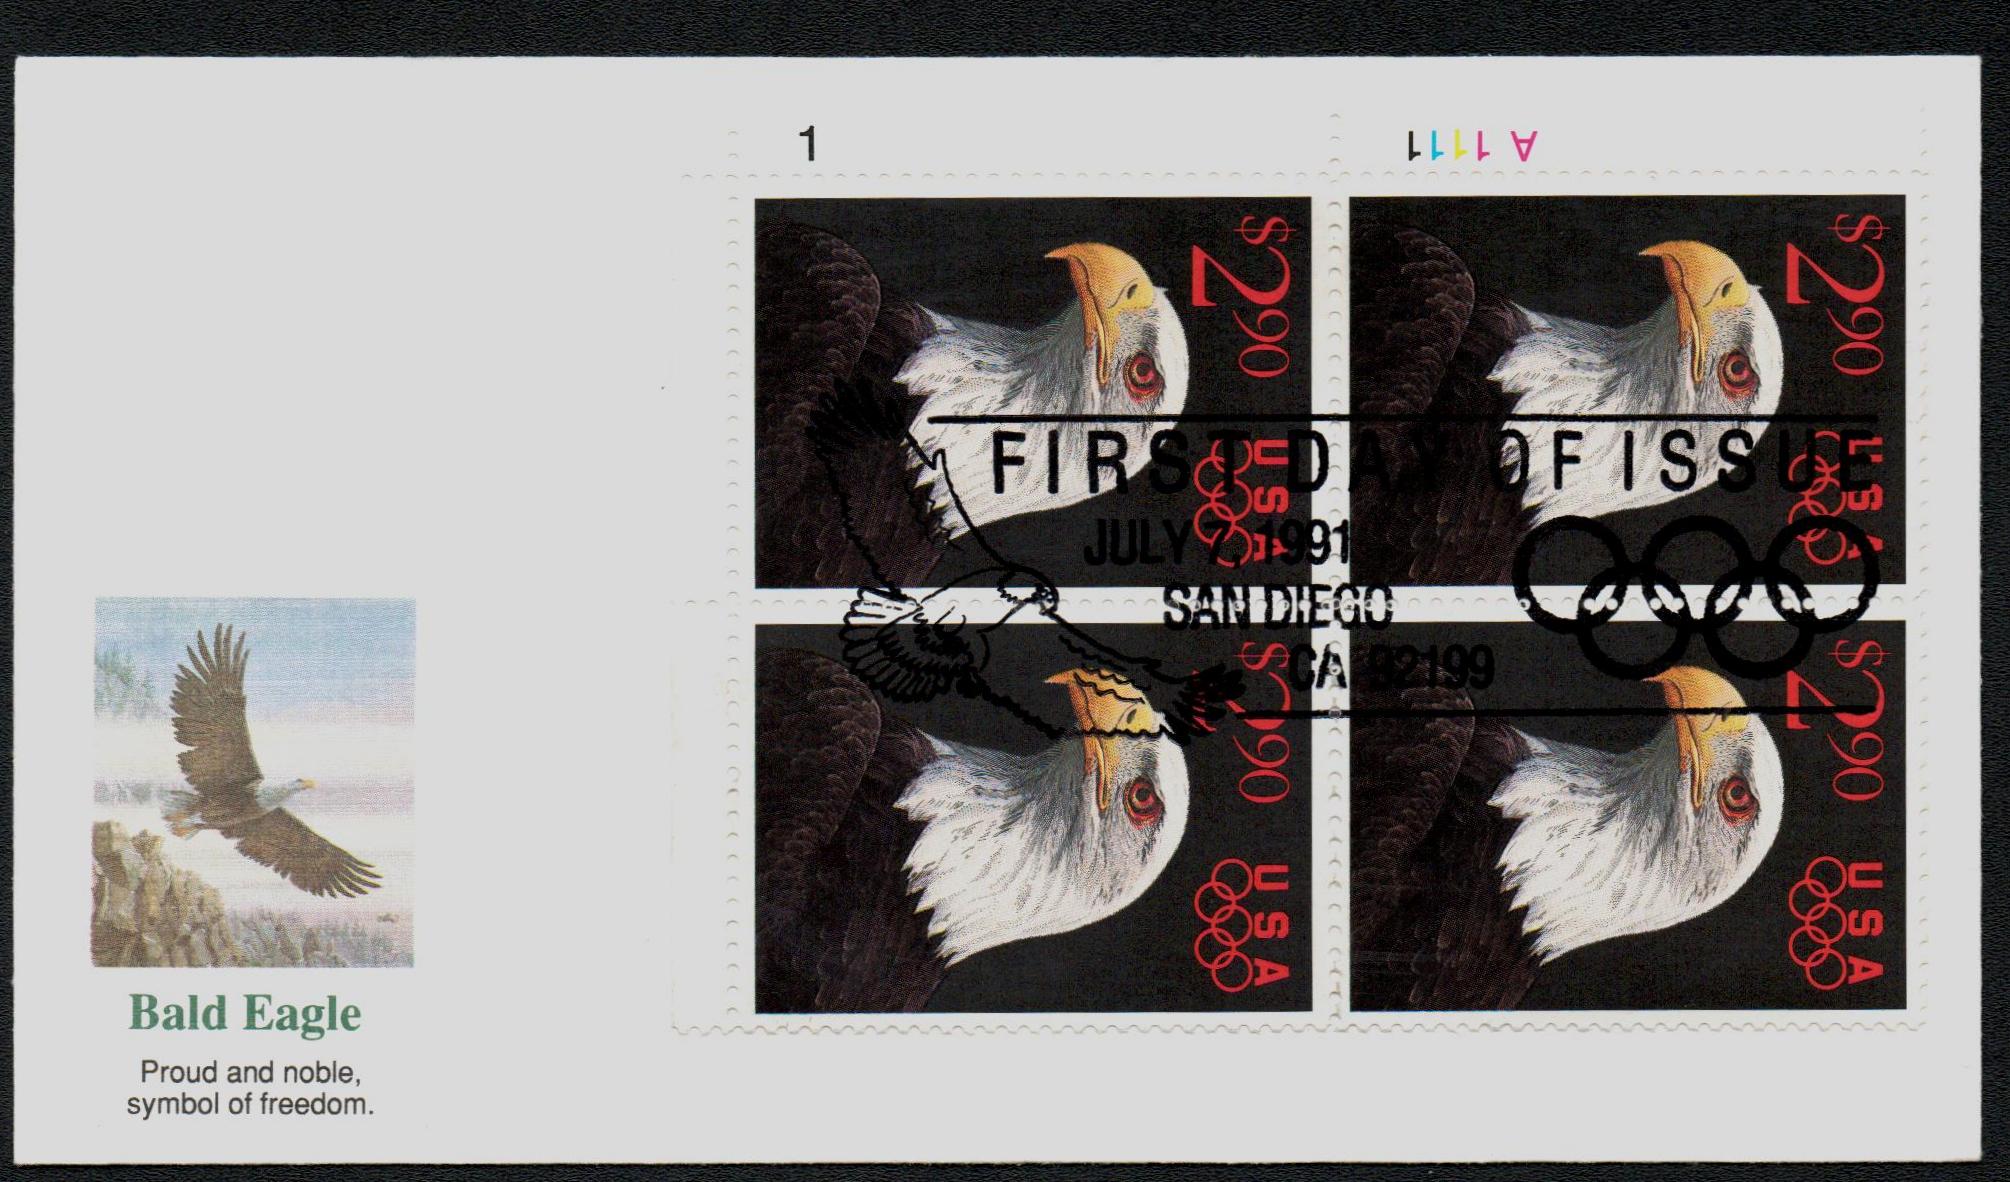 2542 - 1991 $14.00 Eagle, International Express Mail - Mystic Stamp Company